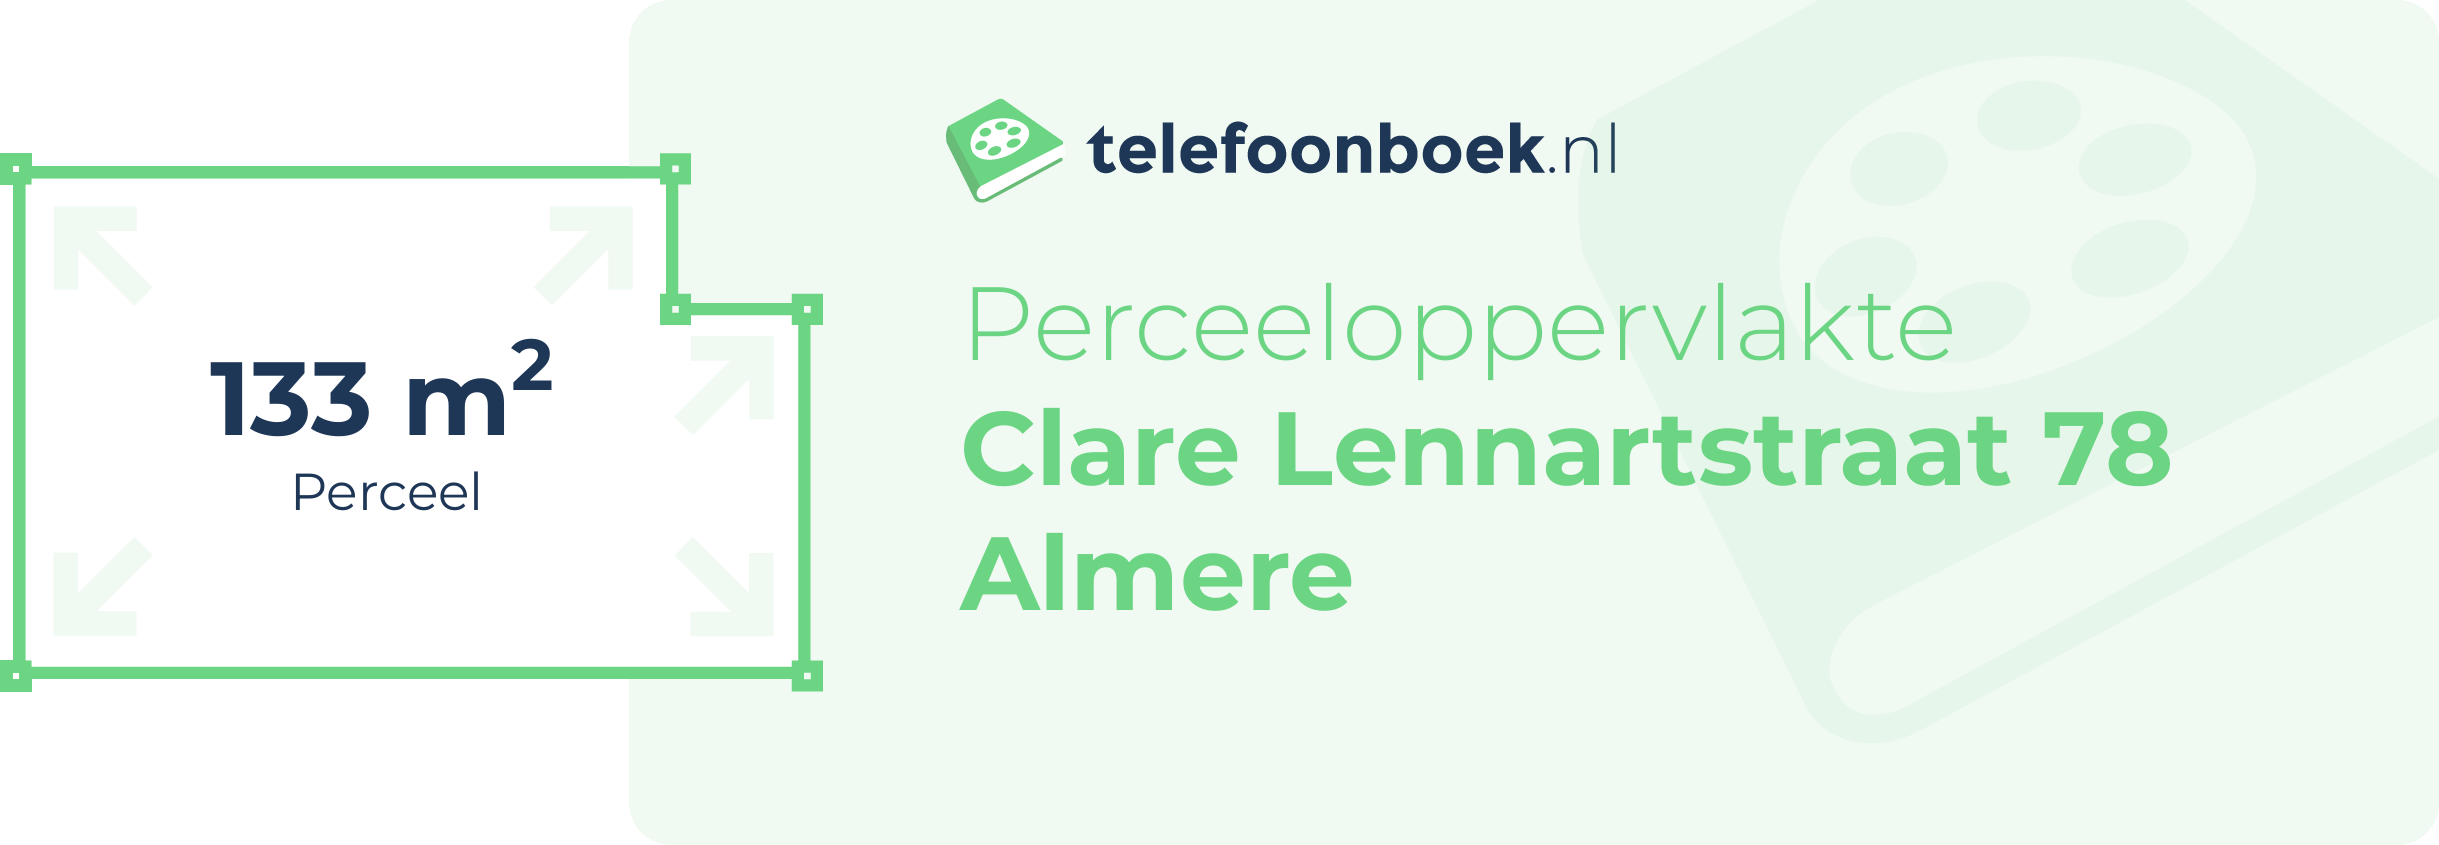 Perceeloppervlakte Clare Lennartstraat 78 Almere